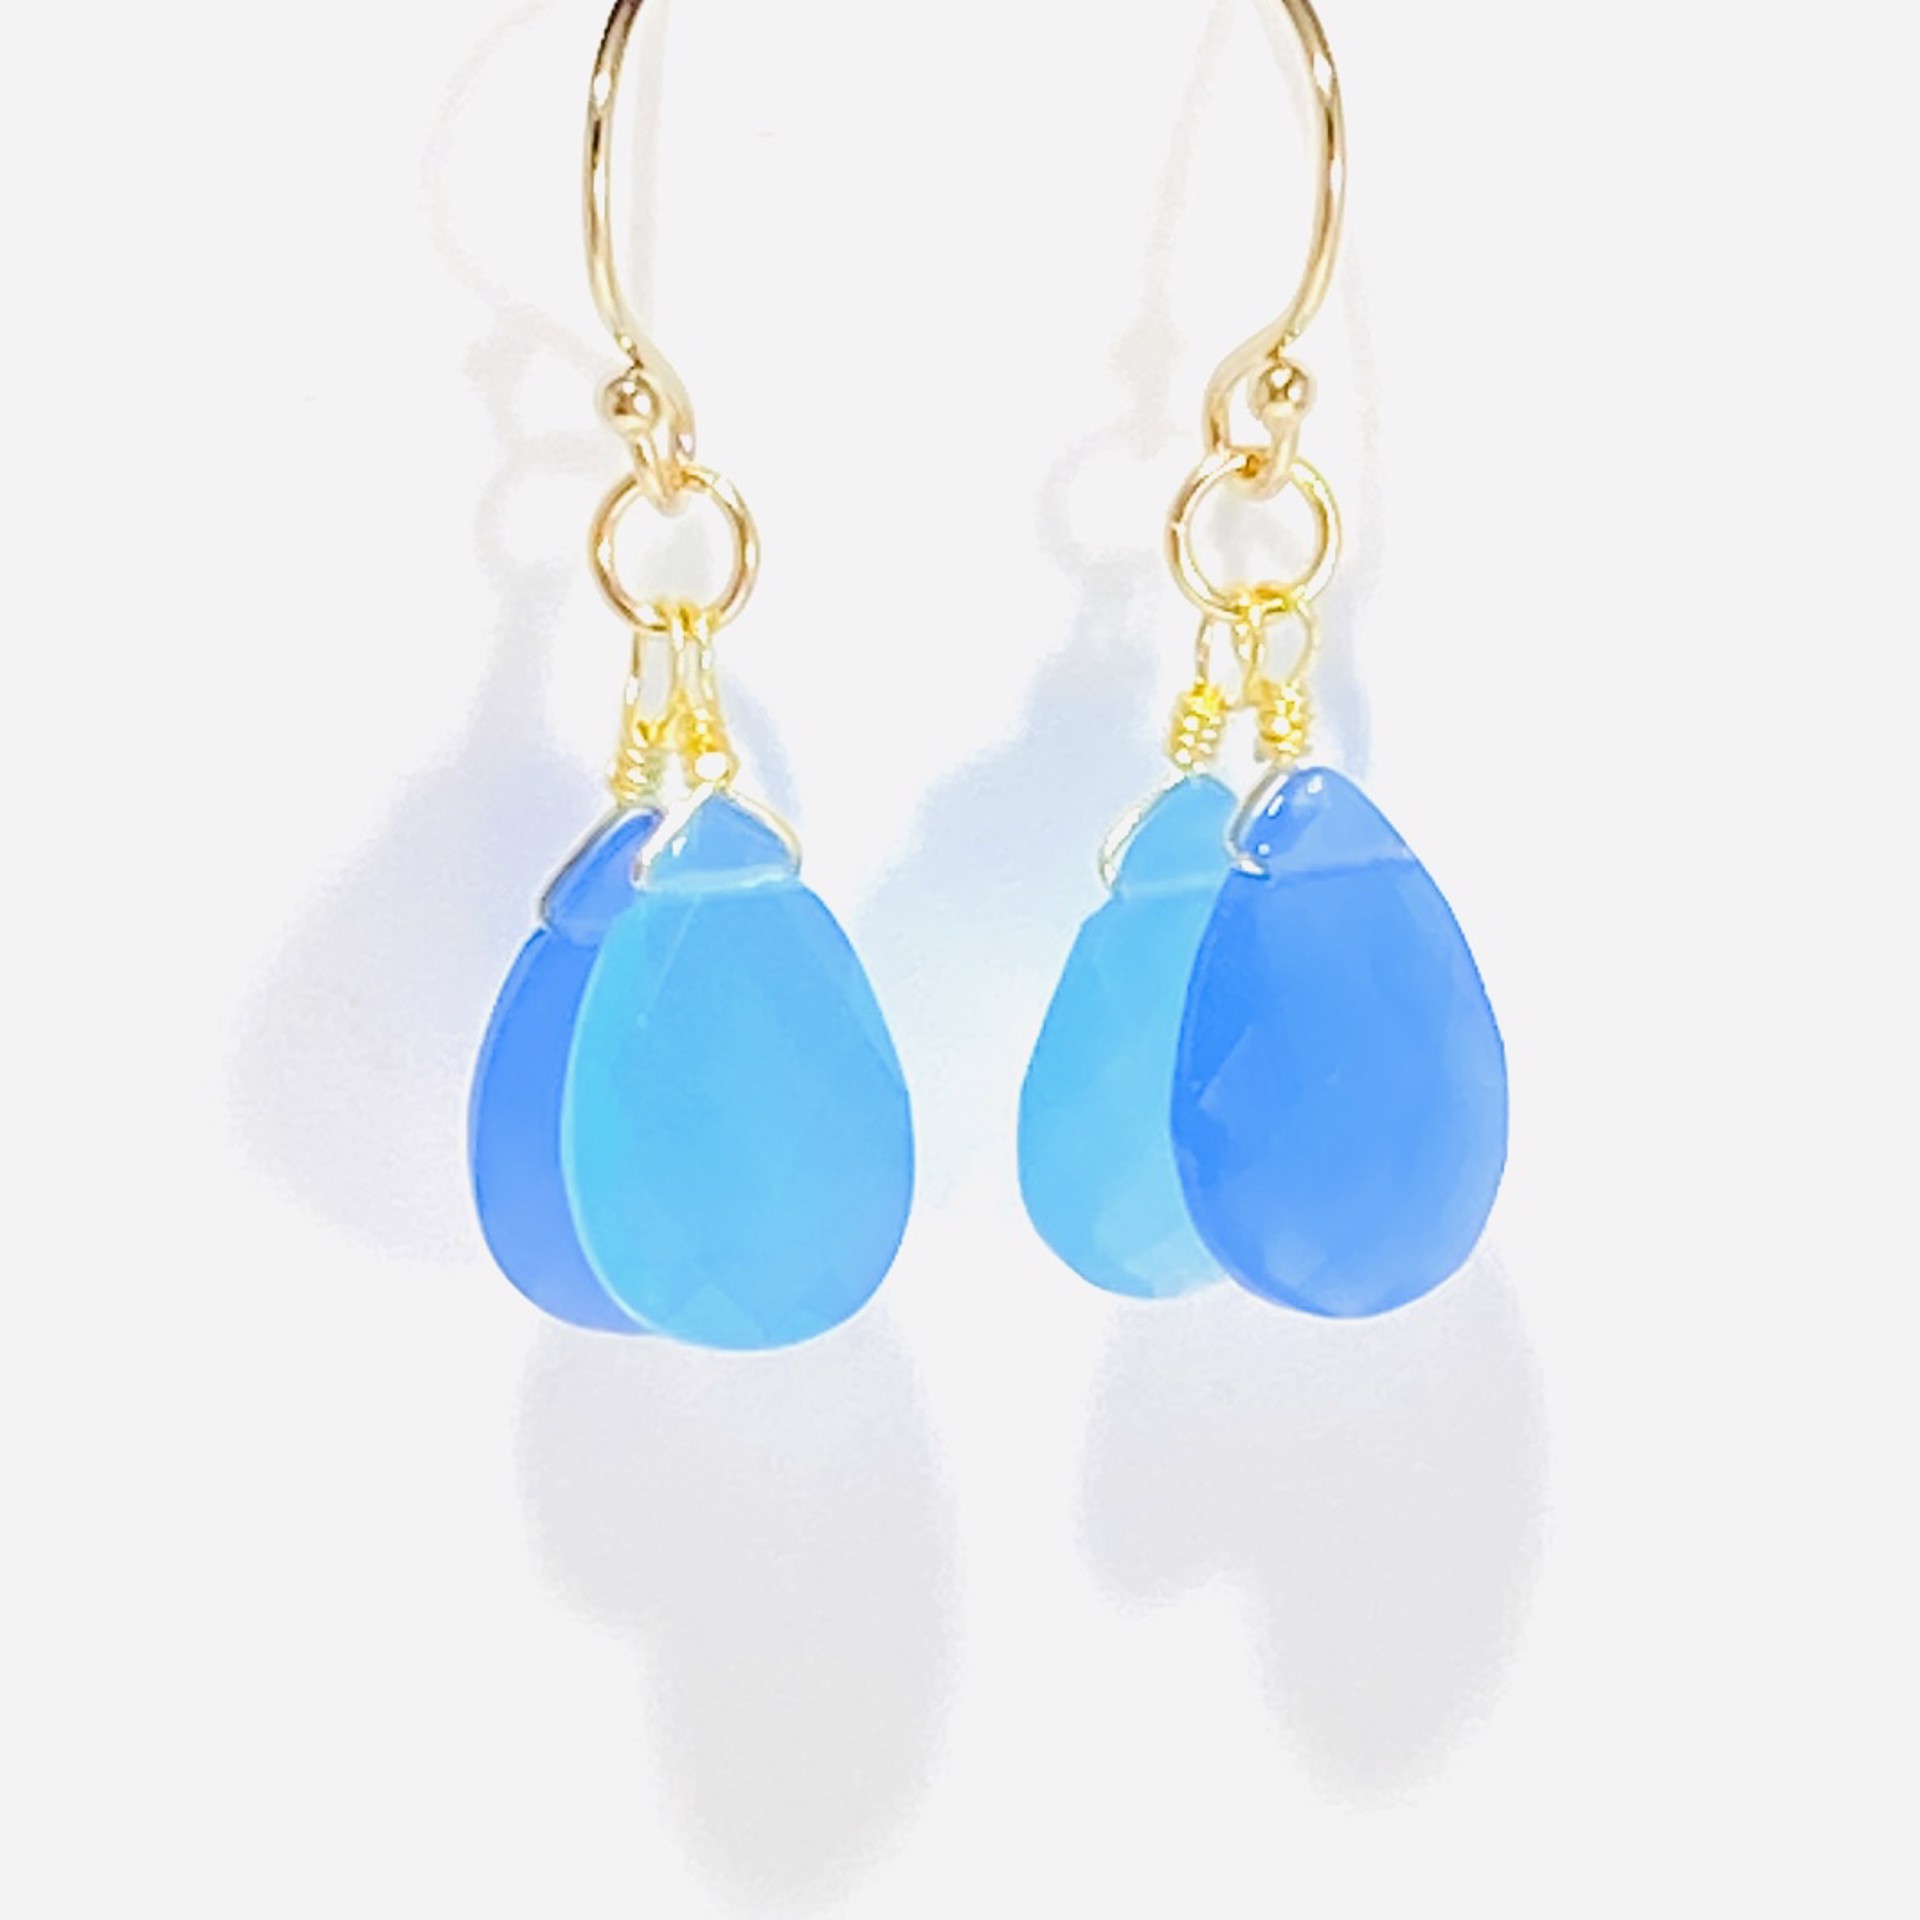 Light Blue and Blue Quartz Teardrop Earring by Nance Trueworthy